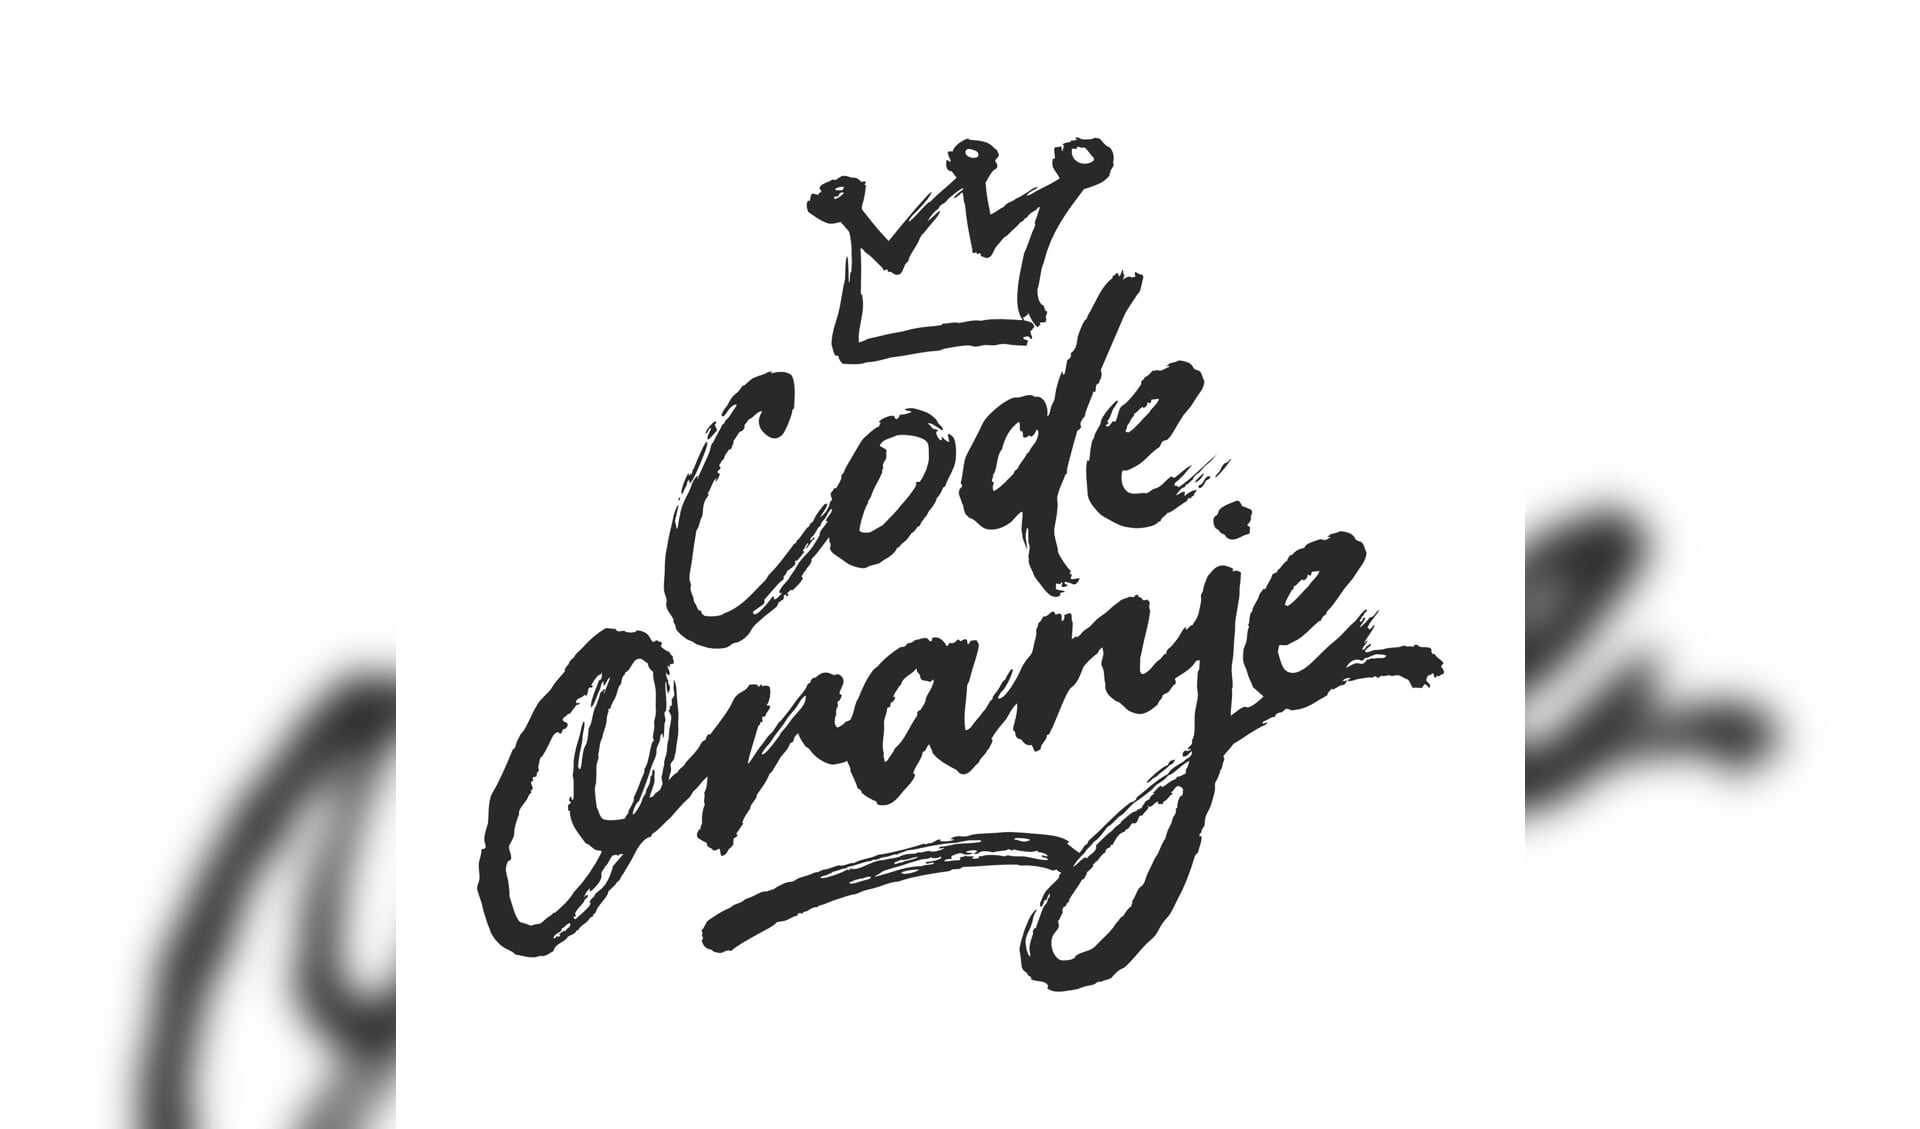 Vandaag: Code Oranje